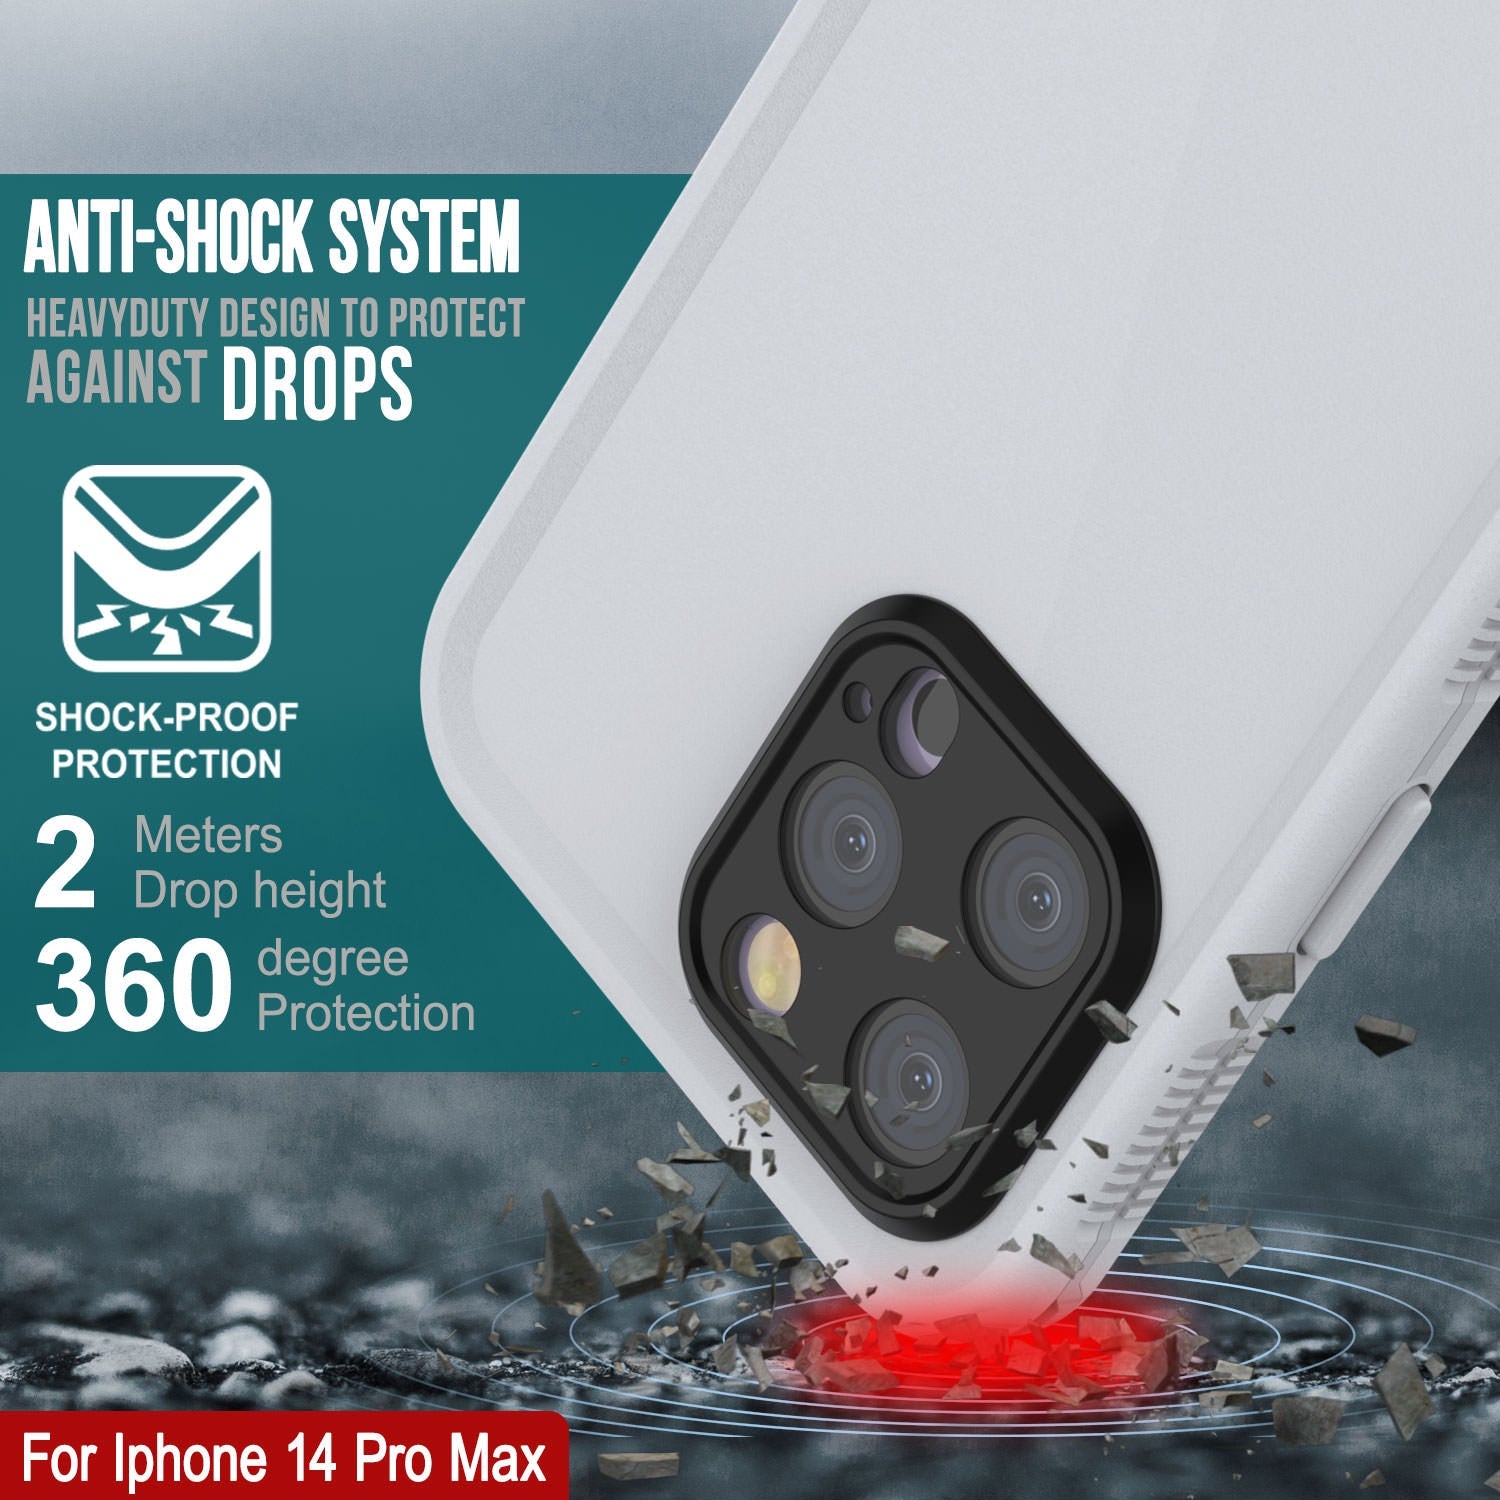 Punkcase iPhone 14 Pro Max Waterproof Case [Aqua Series] Armor Cover [White]